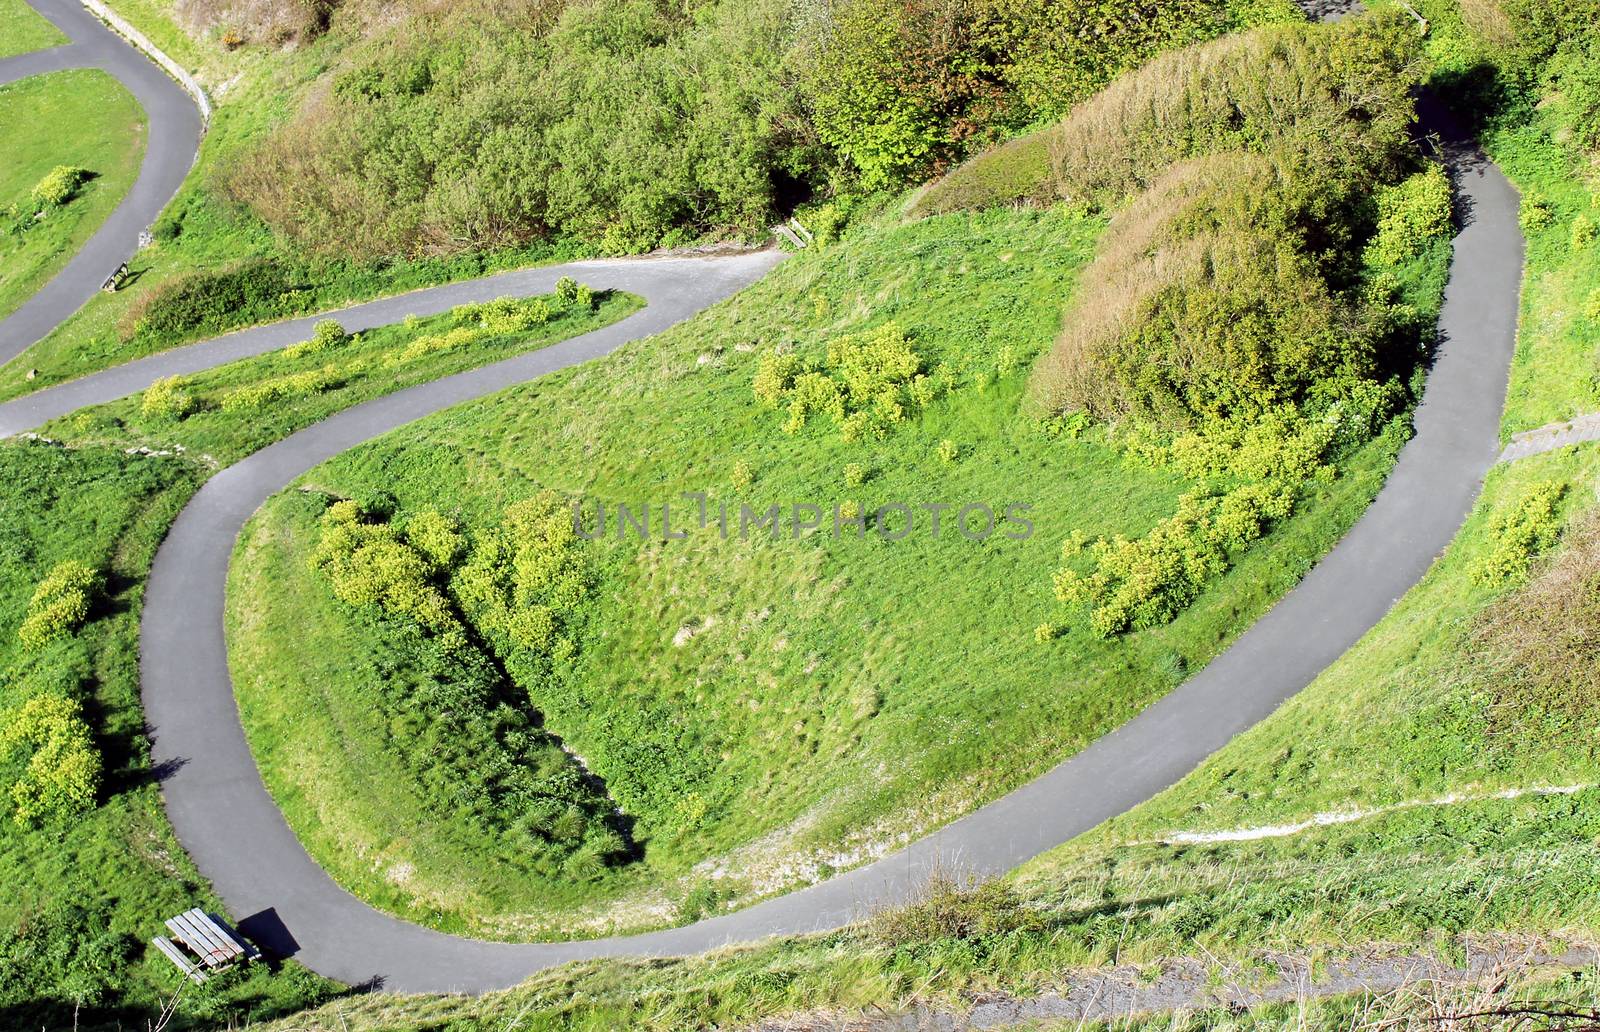 Winding path on a hillside by speedfighter